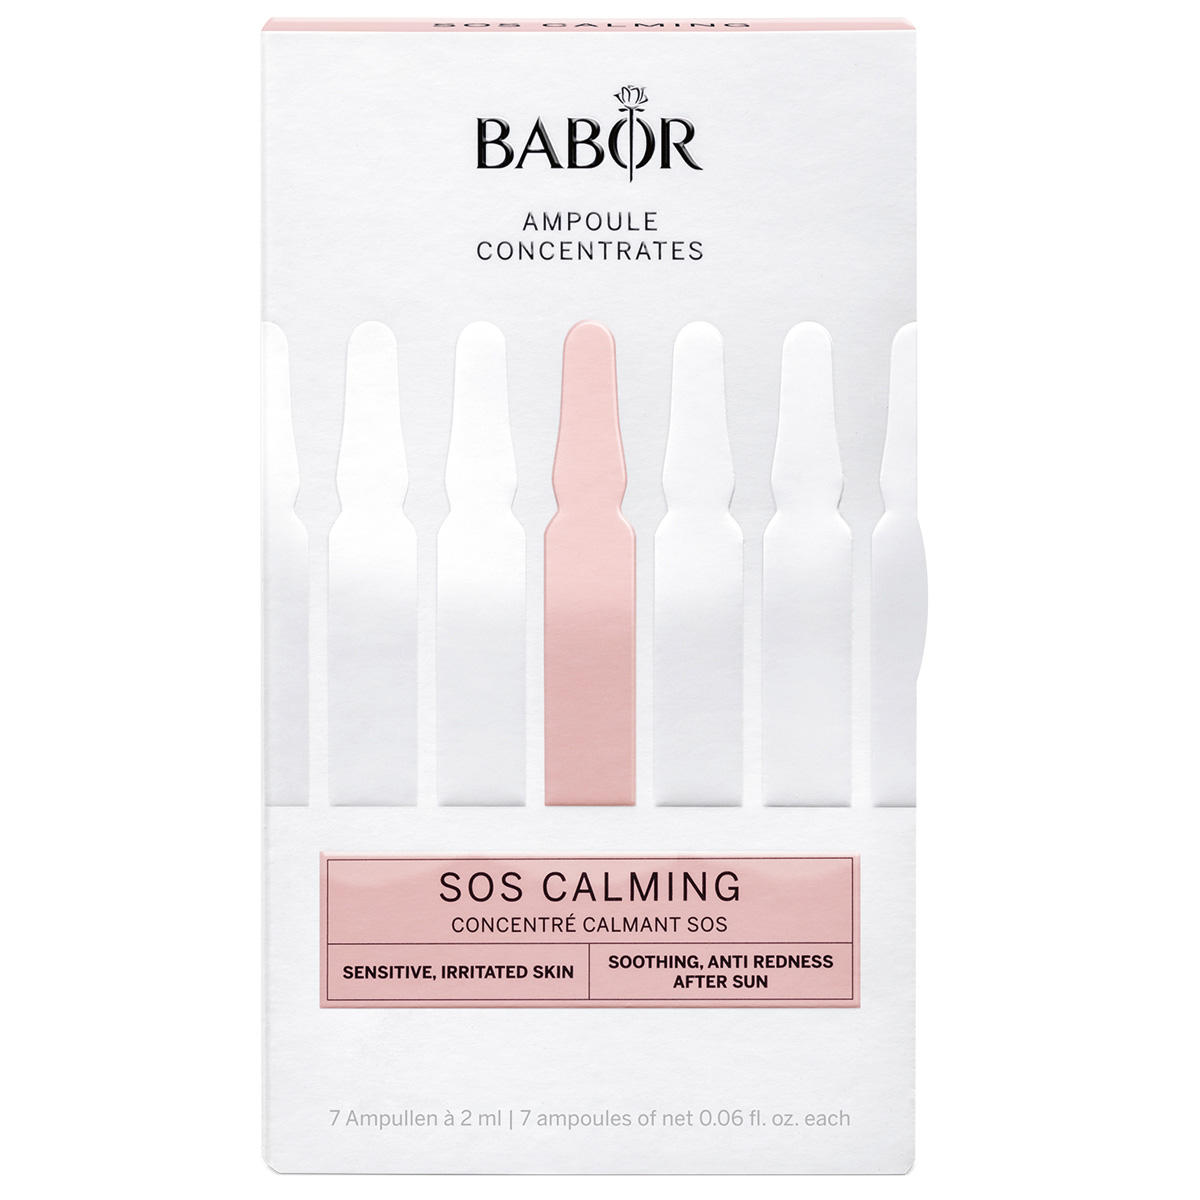 BABOR AMPOULE CONCENTRATES SOS Calming 7 x 2 ml - 1